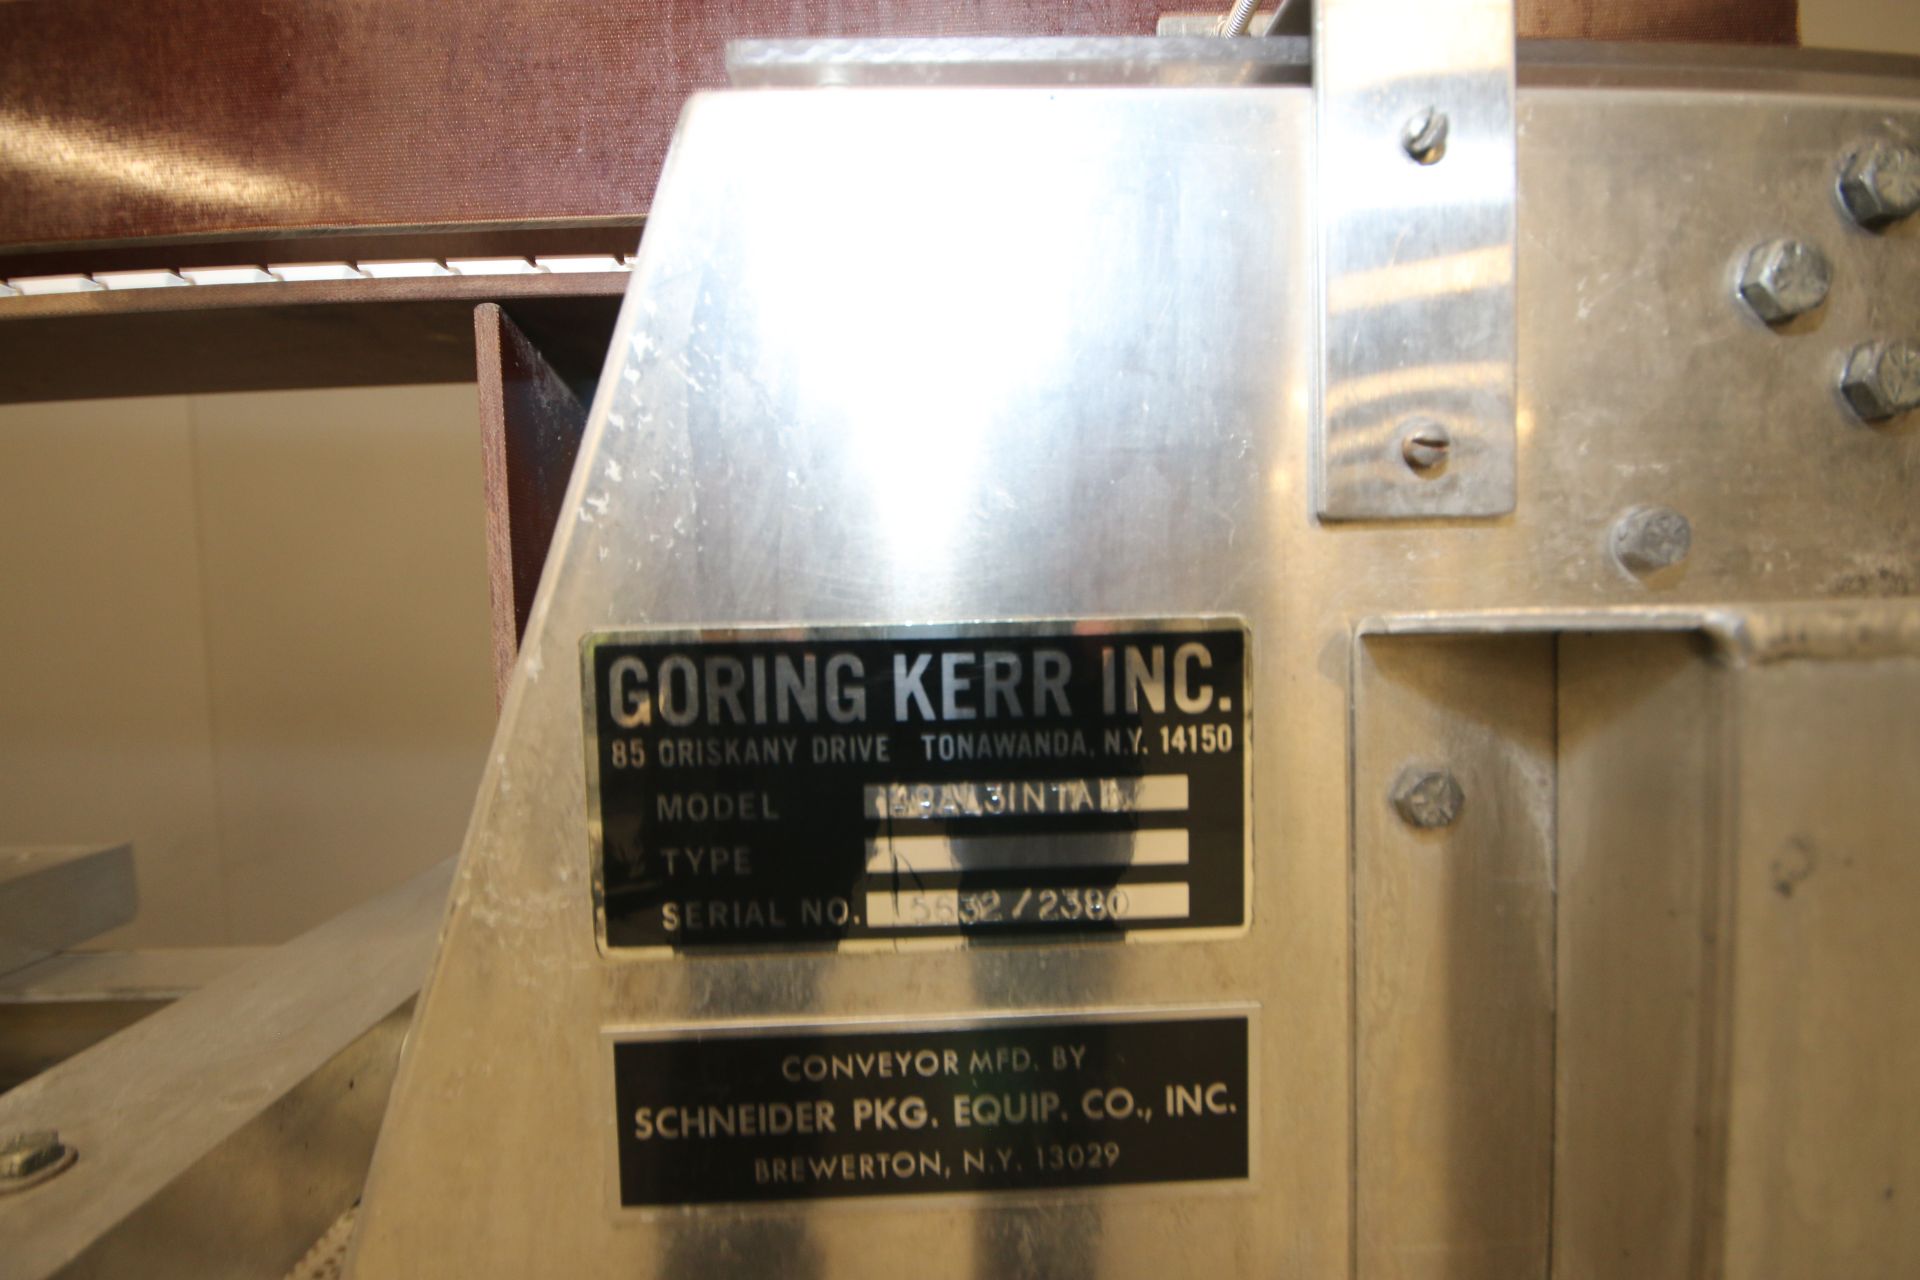 Goring Kerr Straight Section of Aluminum Conveyor, M/N 48AL3INTAB, S/N 5632/2380, Aprox. 4 ft. L x - Image 7 of 8